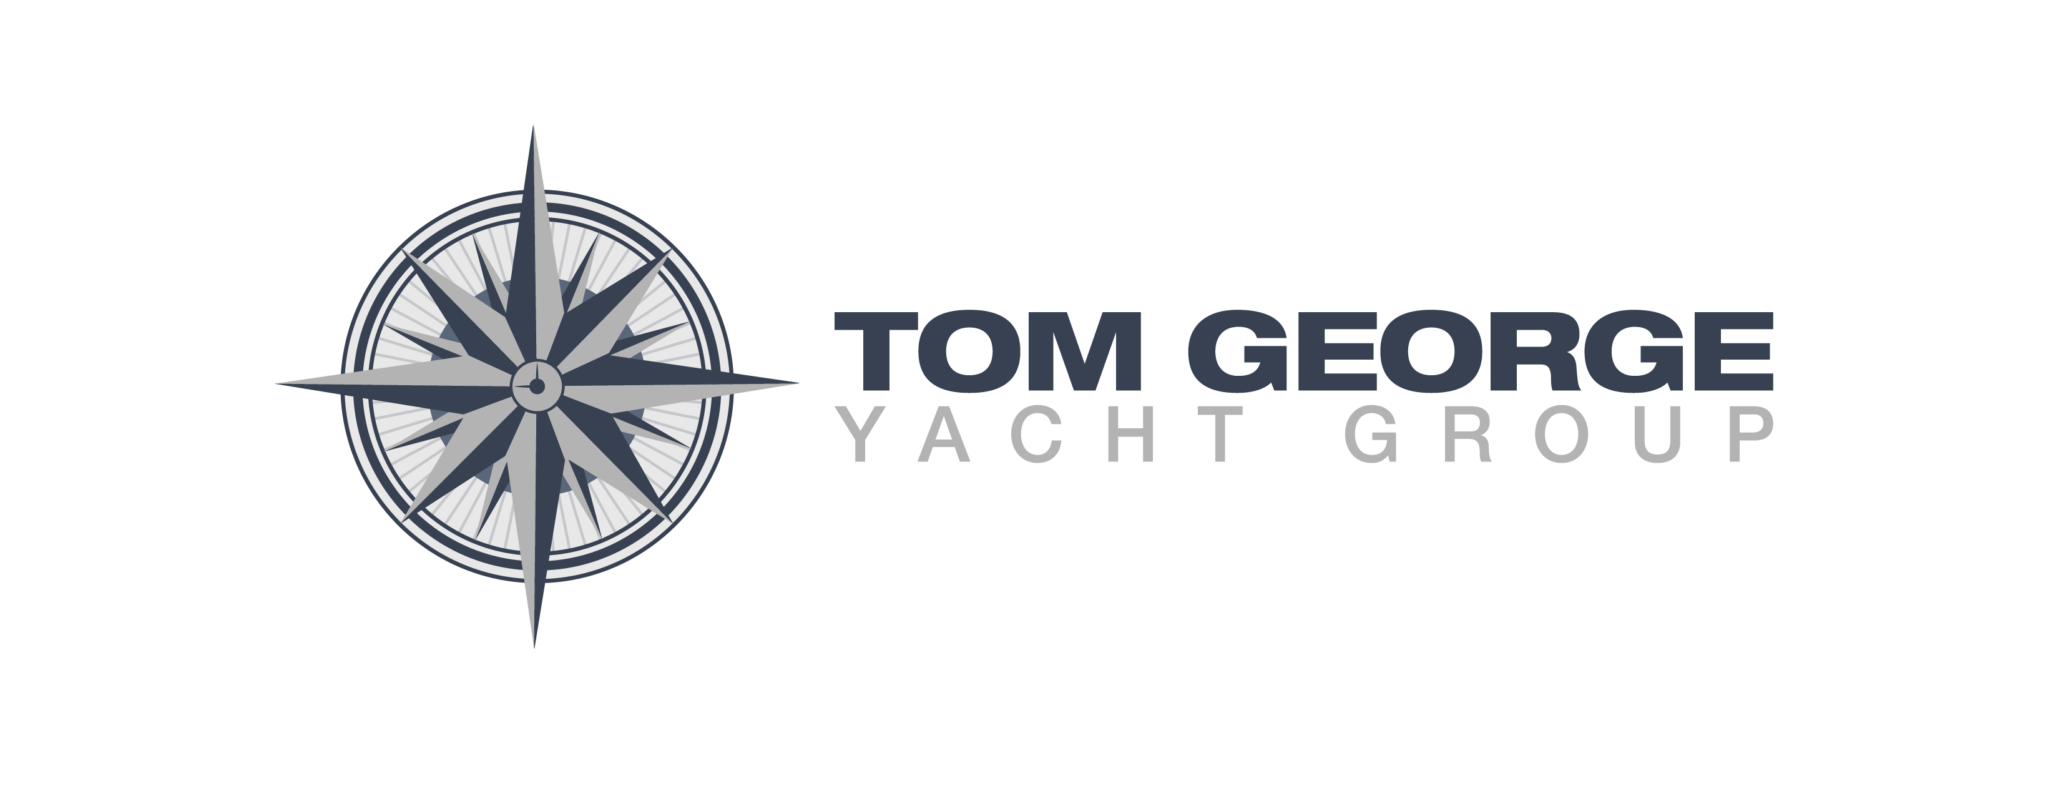 tom george yacht group jobs